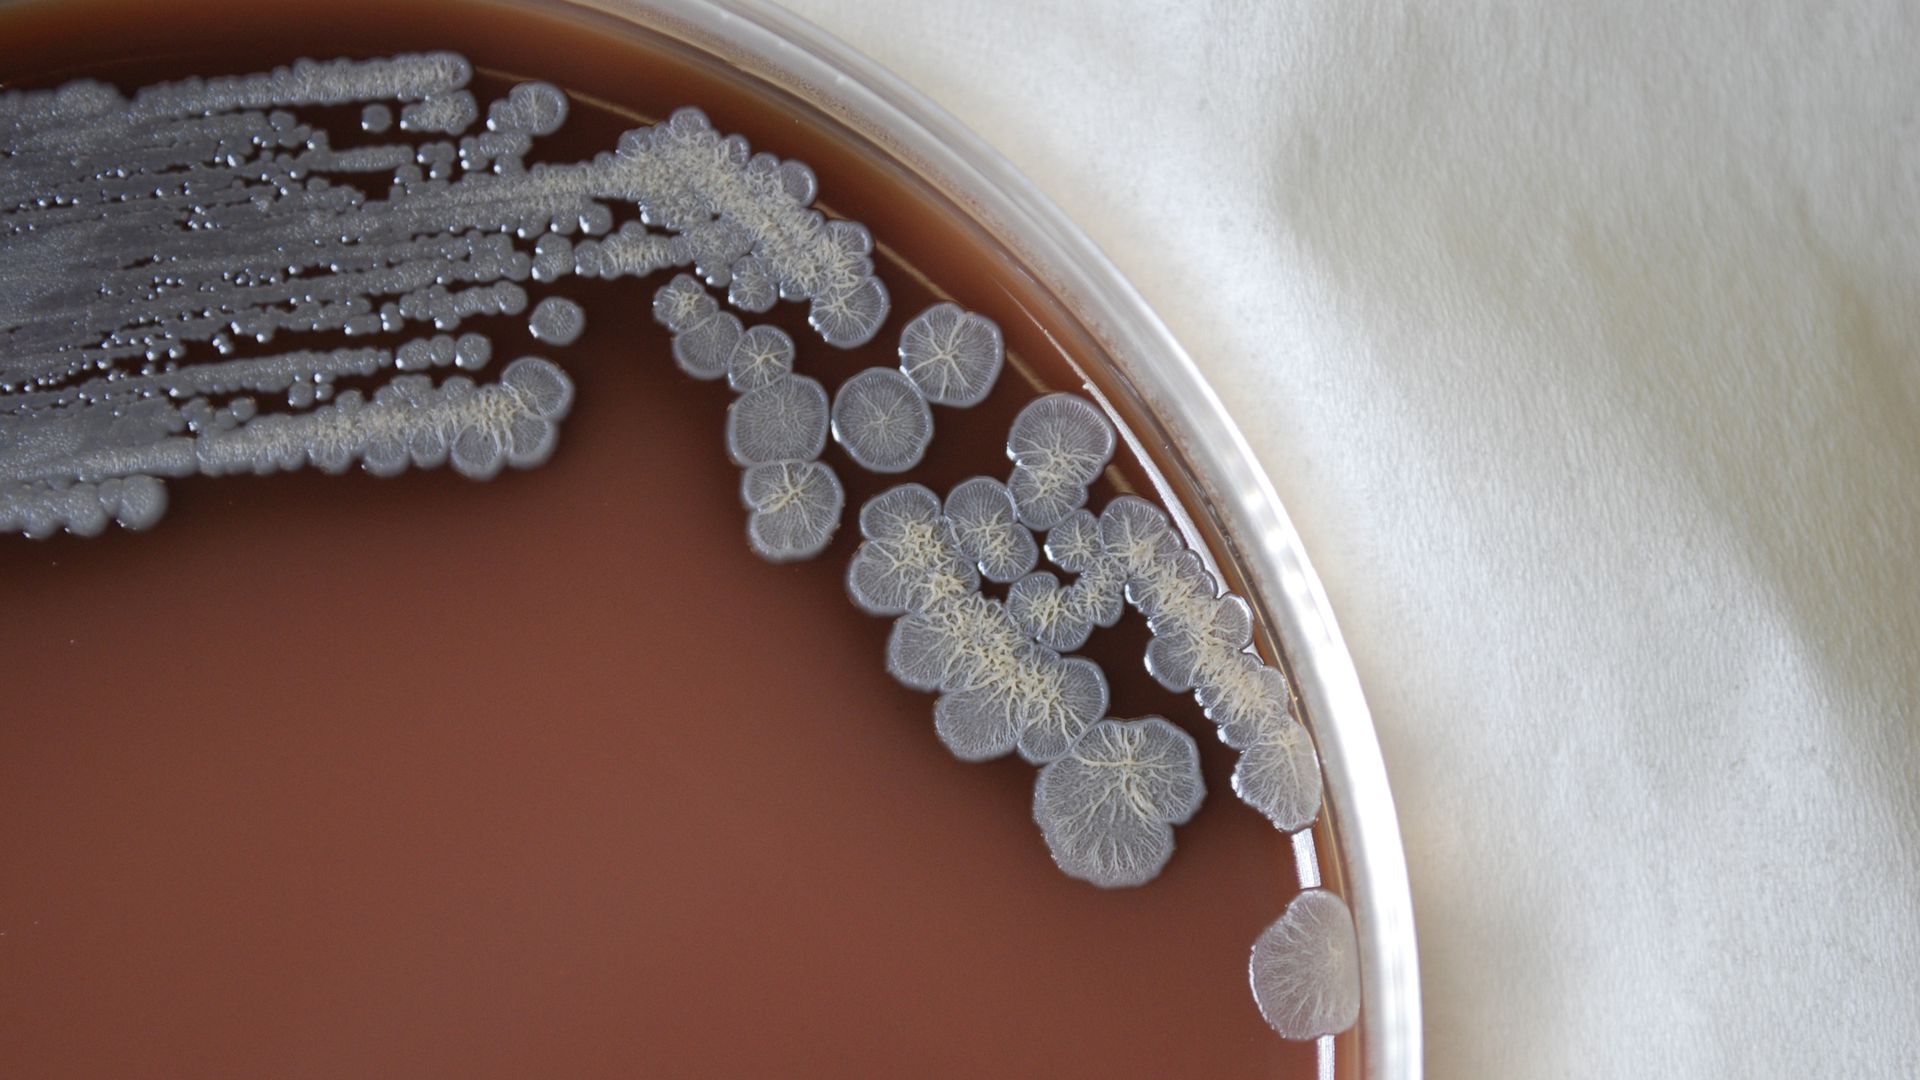 Colonial morphology of Gram-negative Burkholderia pseudomallei bacteria grown 72 hours on a medium of chocolate agar, 2010. 